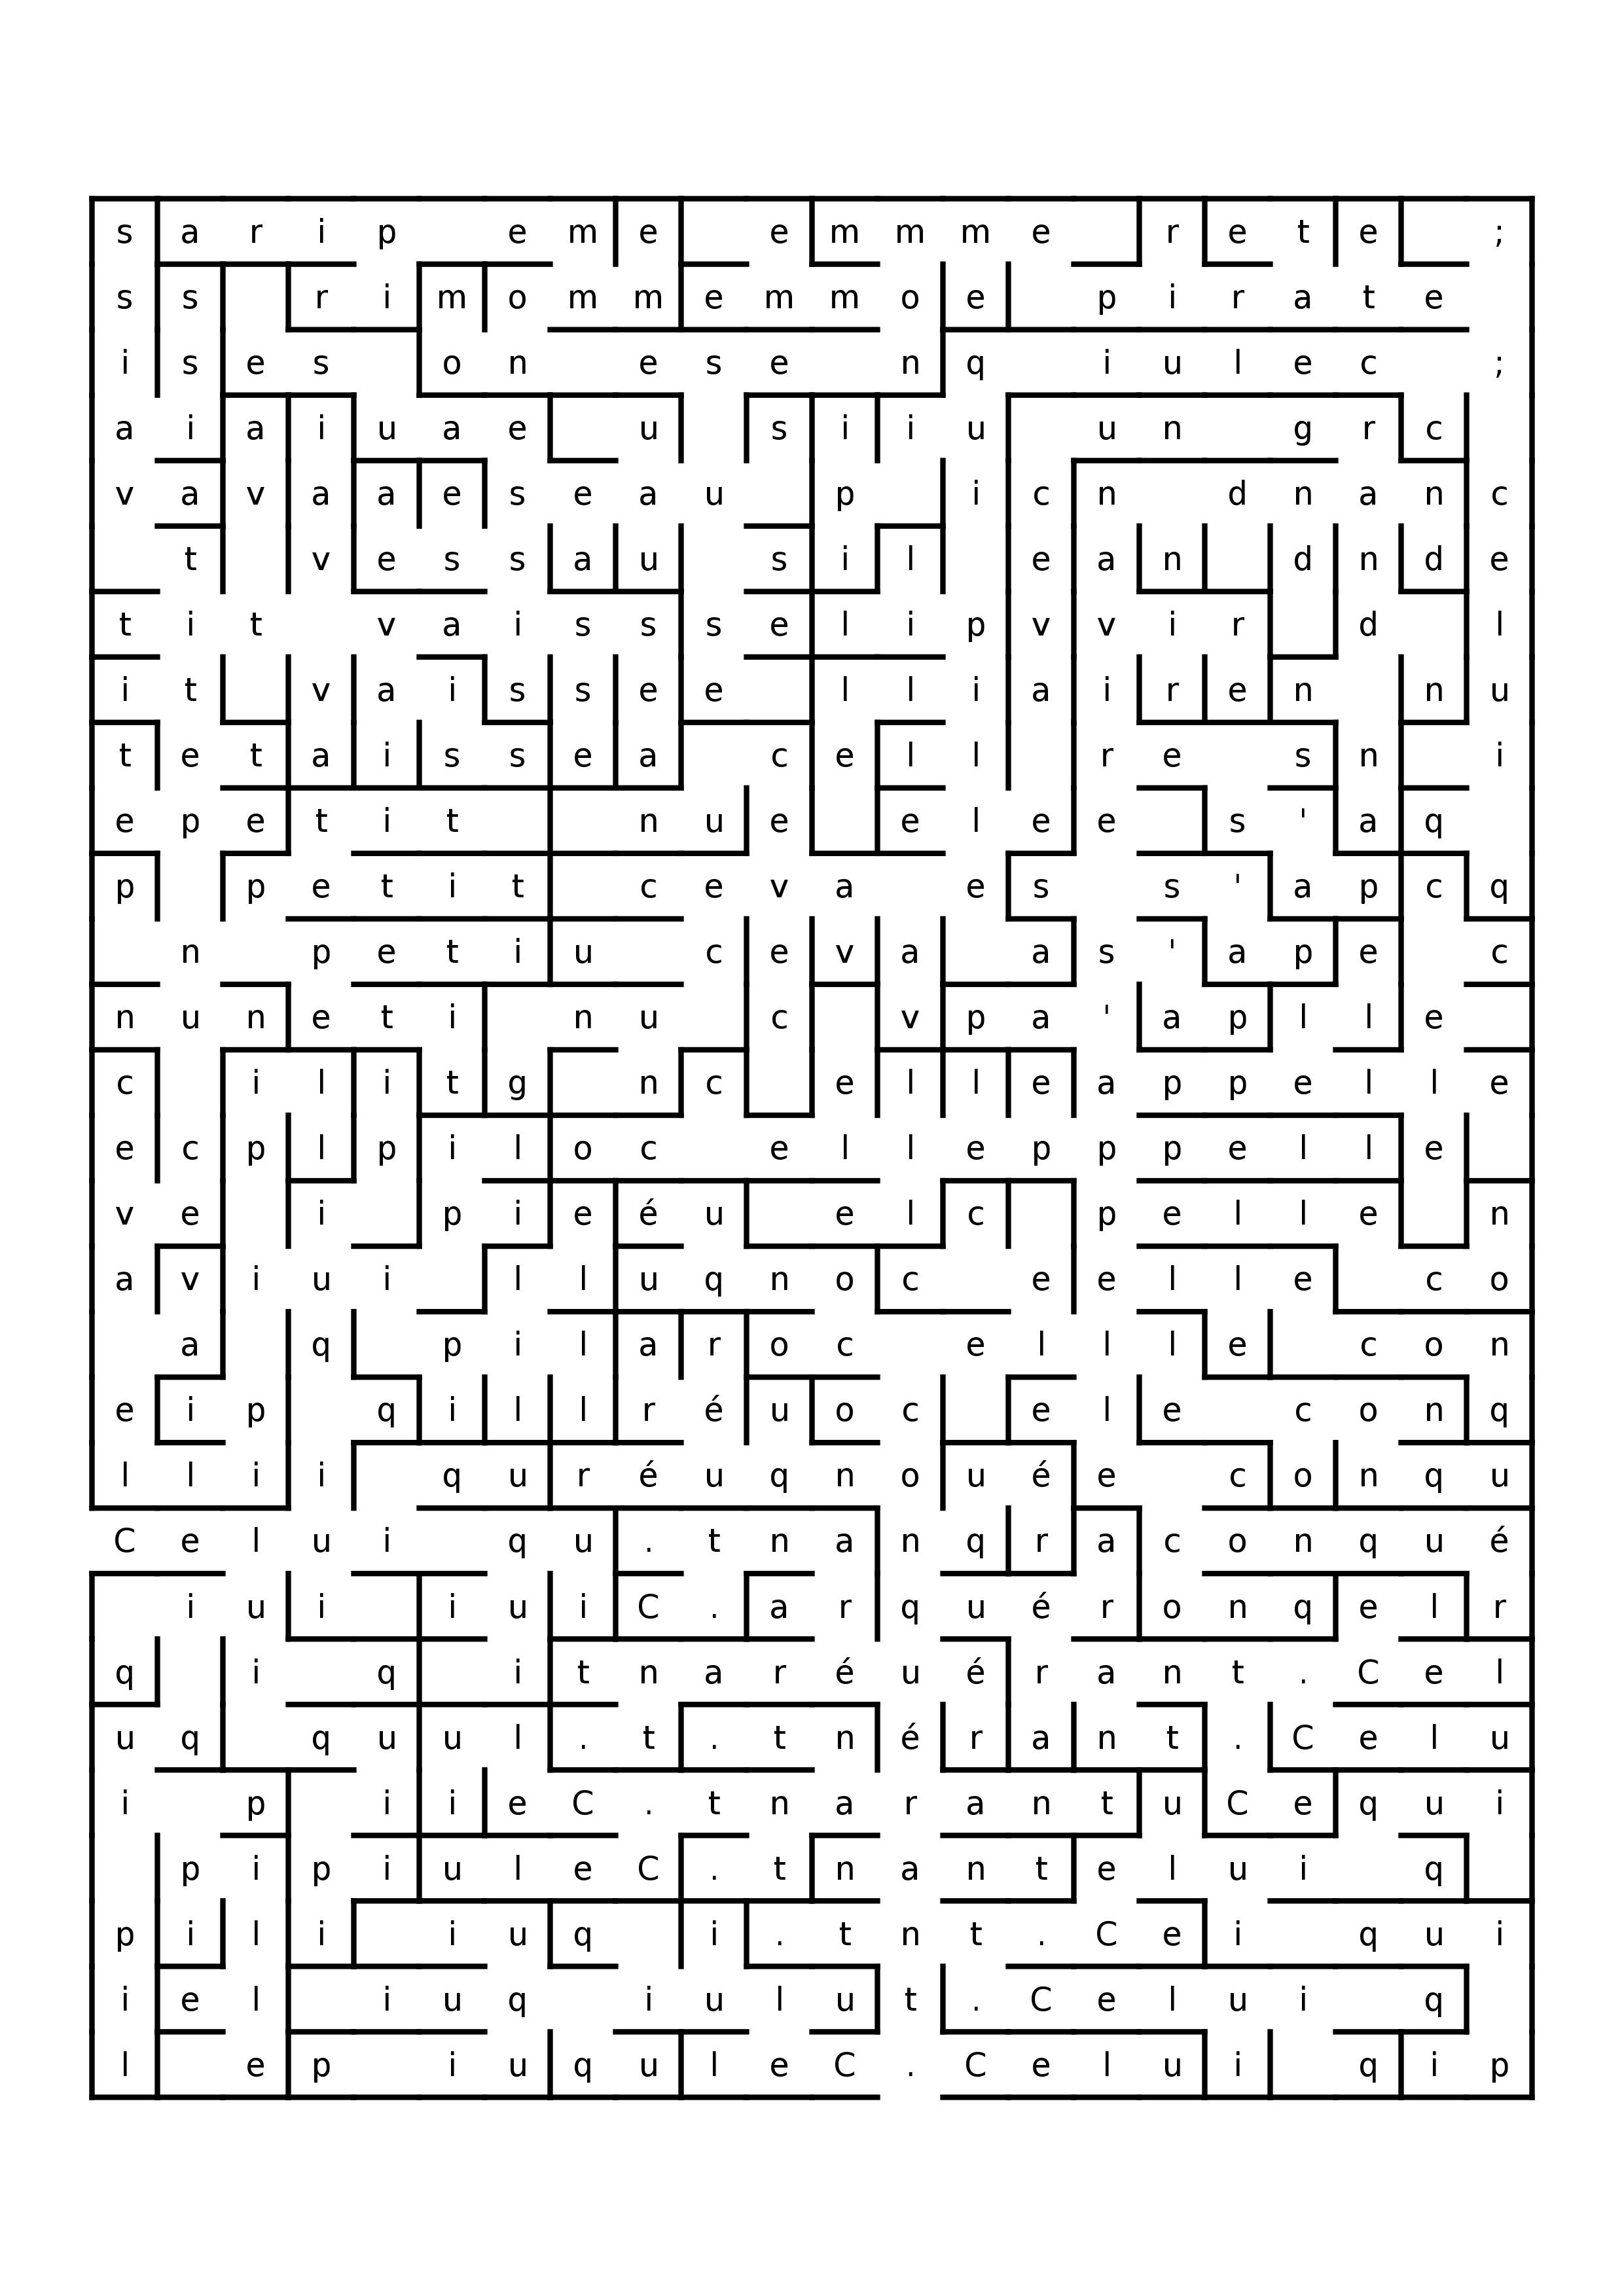 labyrinthe.jpg